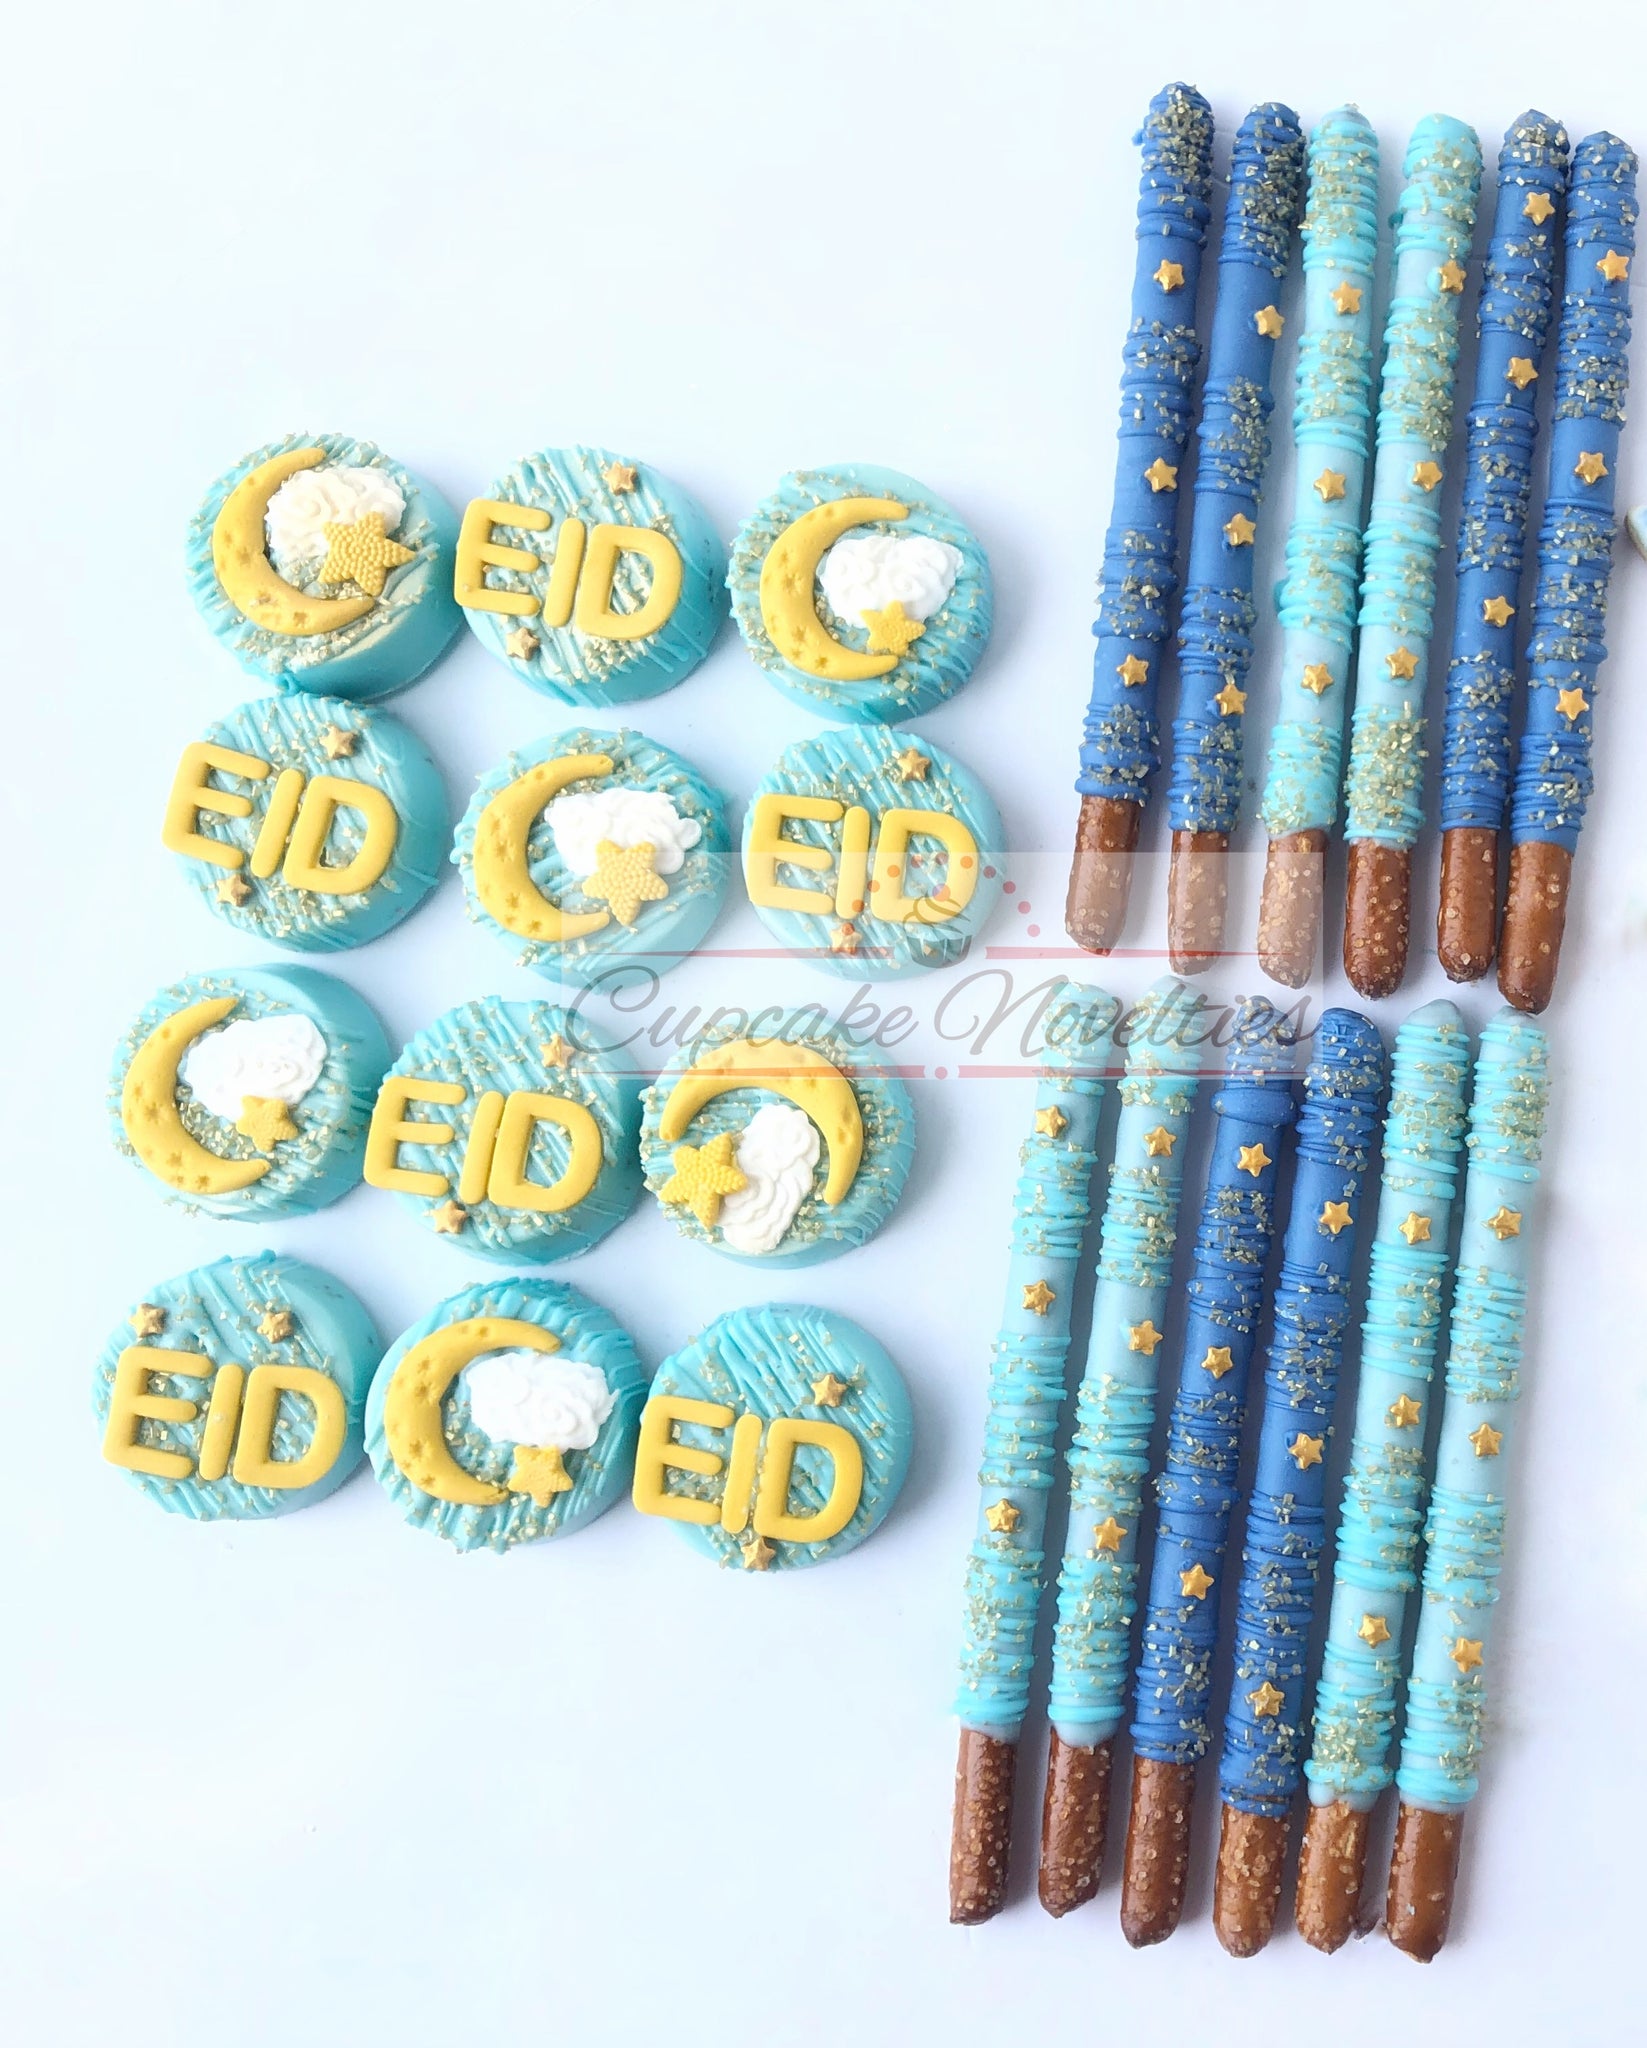 Ramadan Gifts with Chocolates Dates & Premium Chocolate Bites - Oriole Gifts  at Rs 349/box | चॉकलेट गिफ्ट in Bhiwandi | ID: 2850474120573